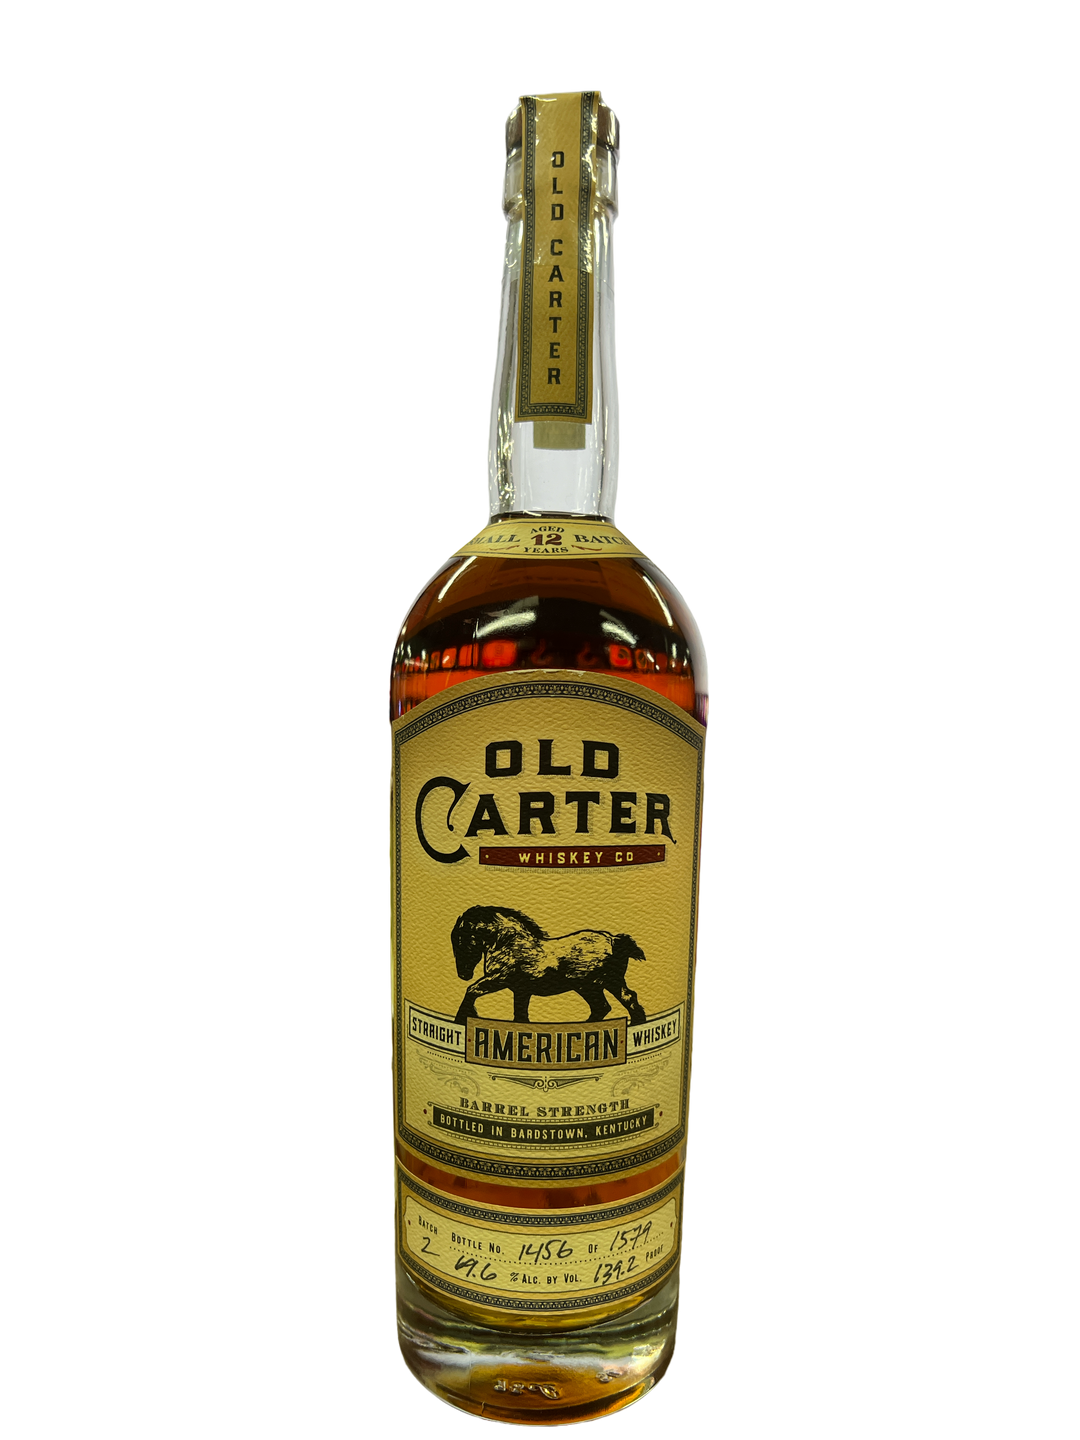 Buy Old Carter Straight Kentucky Whiskey Barrel Strength Batch 2 Online -Craft City